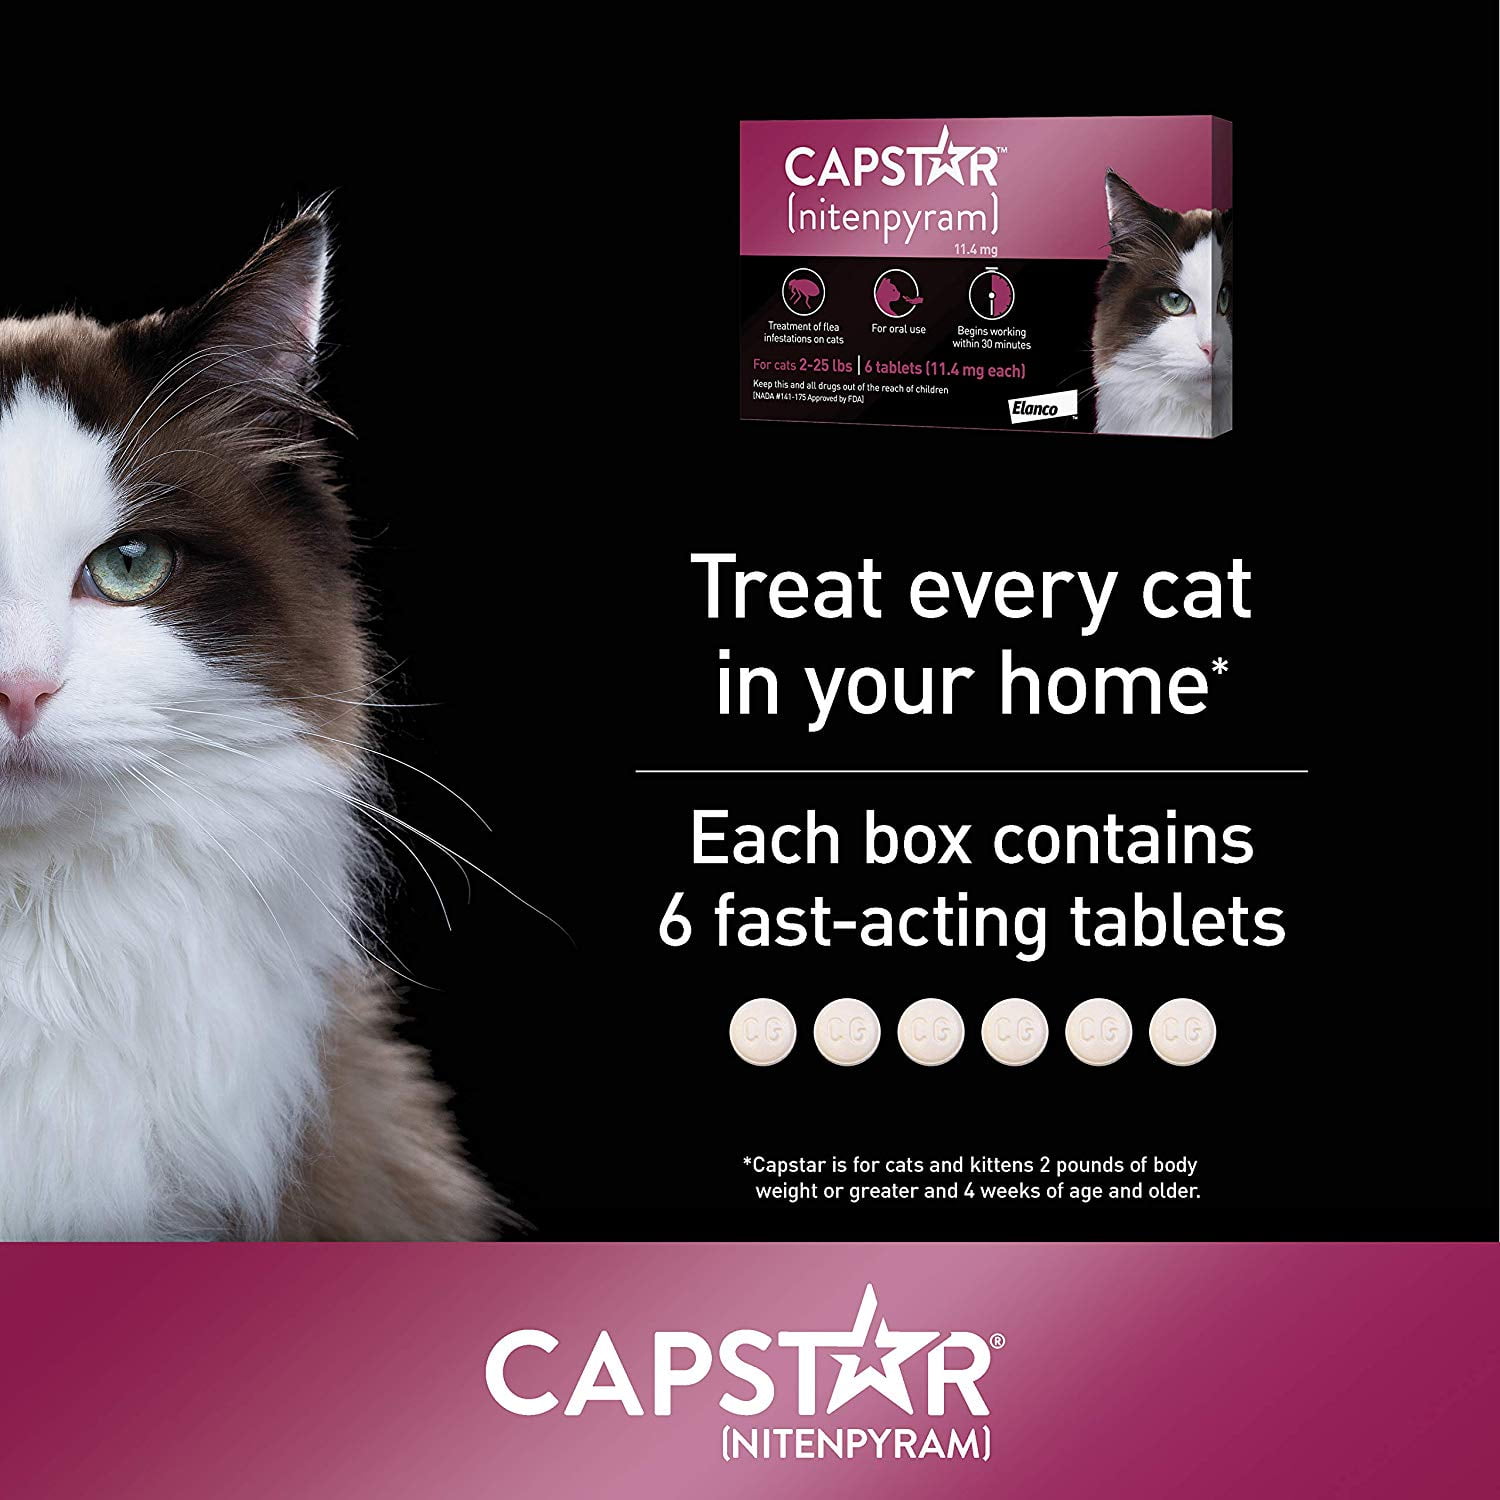 capstar for kittens dosage